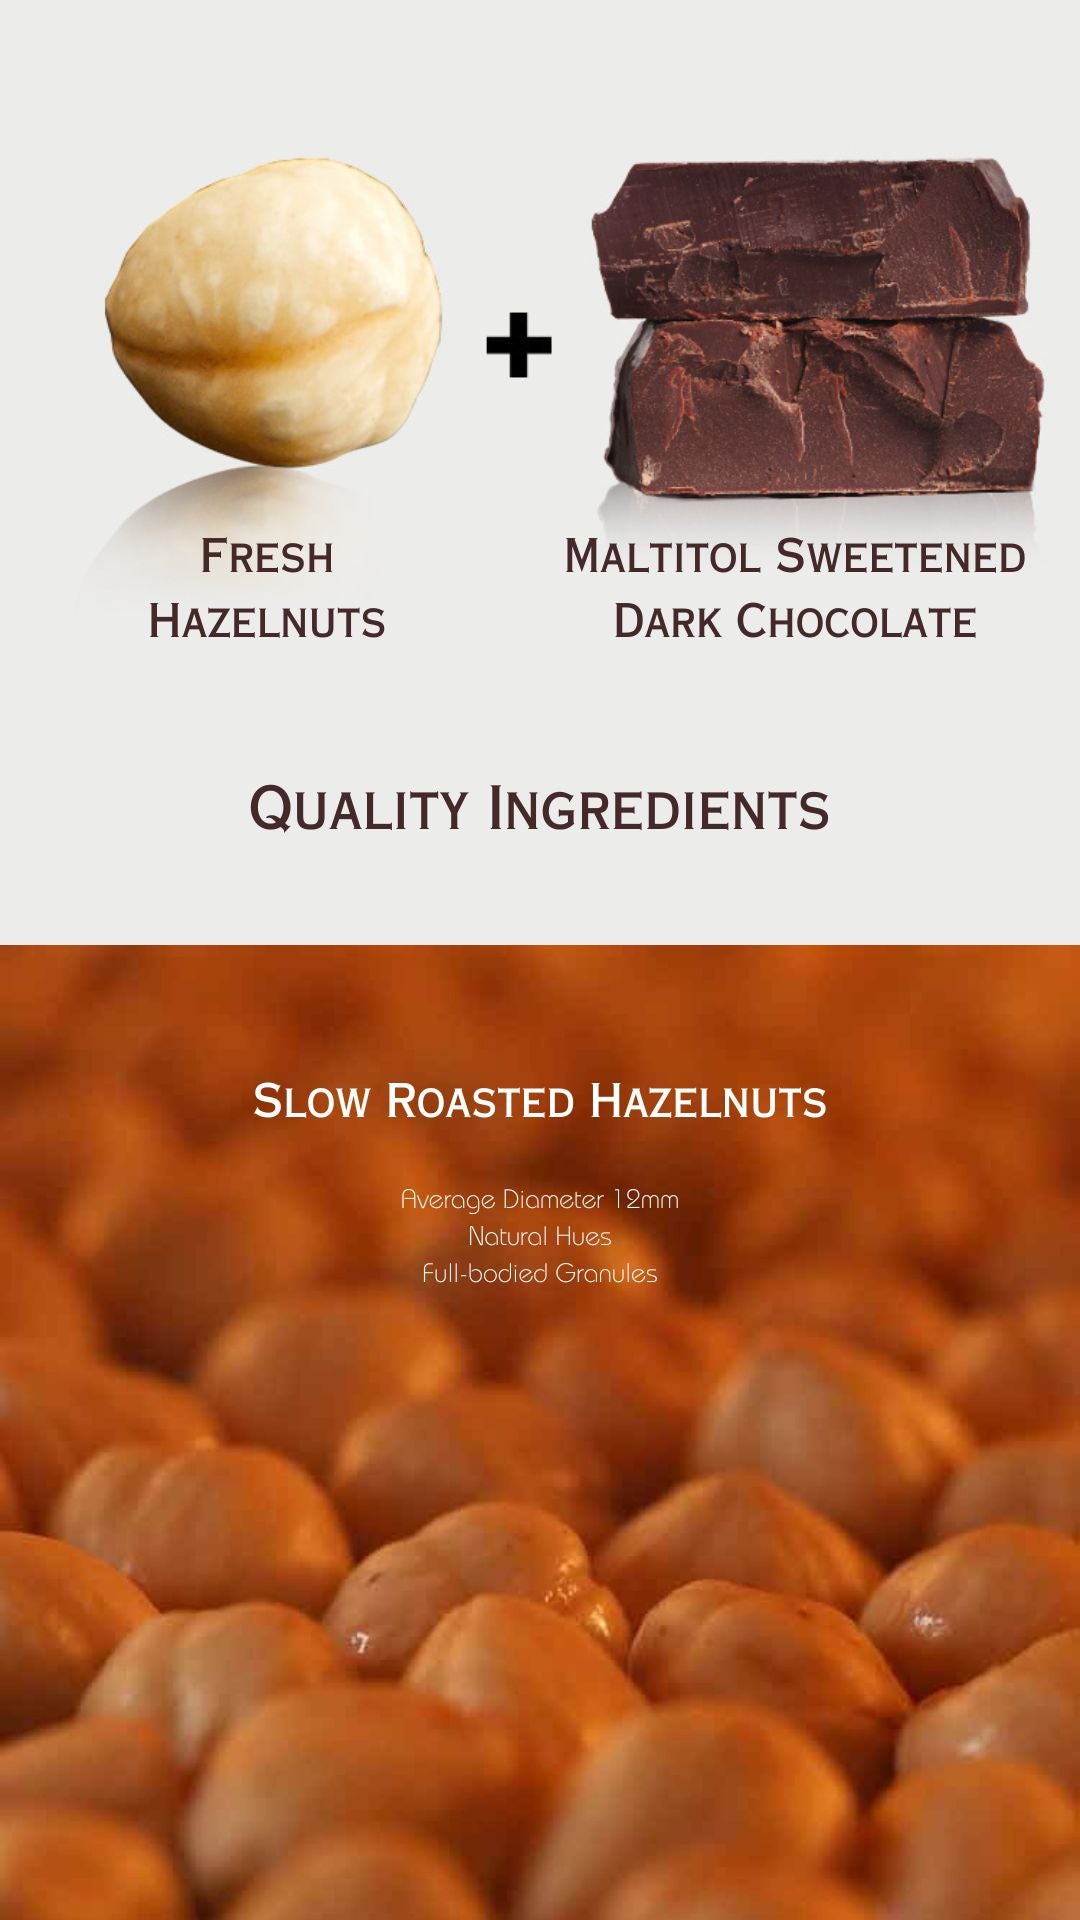 No-Sugar-Added Hazelnut Chocolate Bars, 6 Ct - Maltitol Sweetened